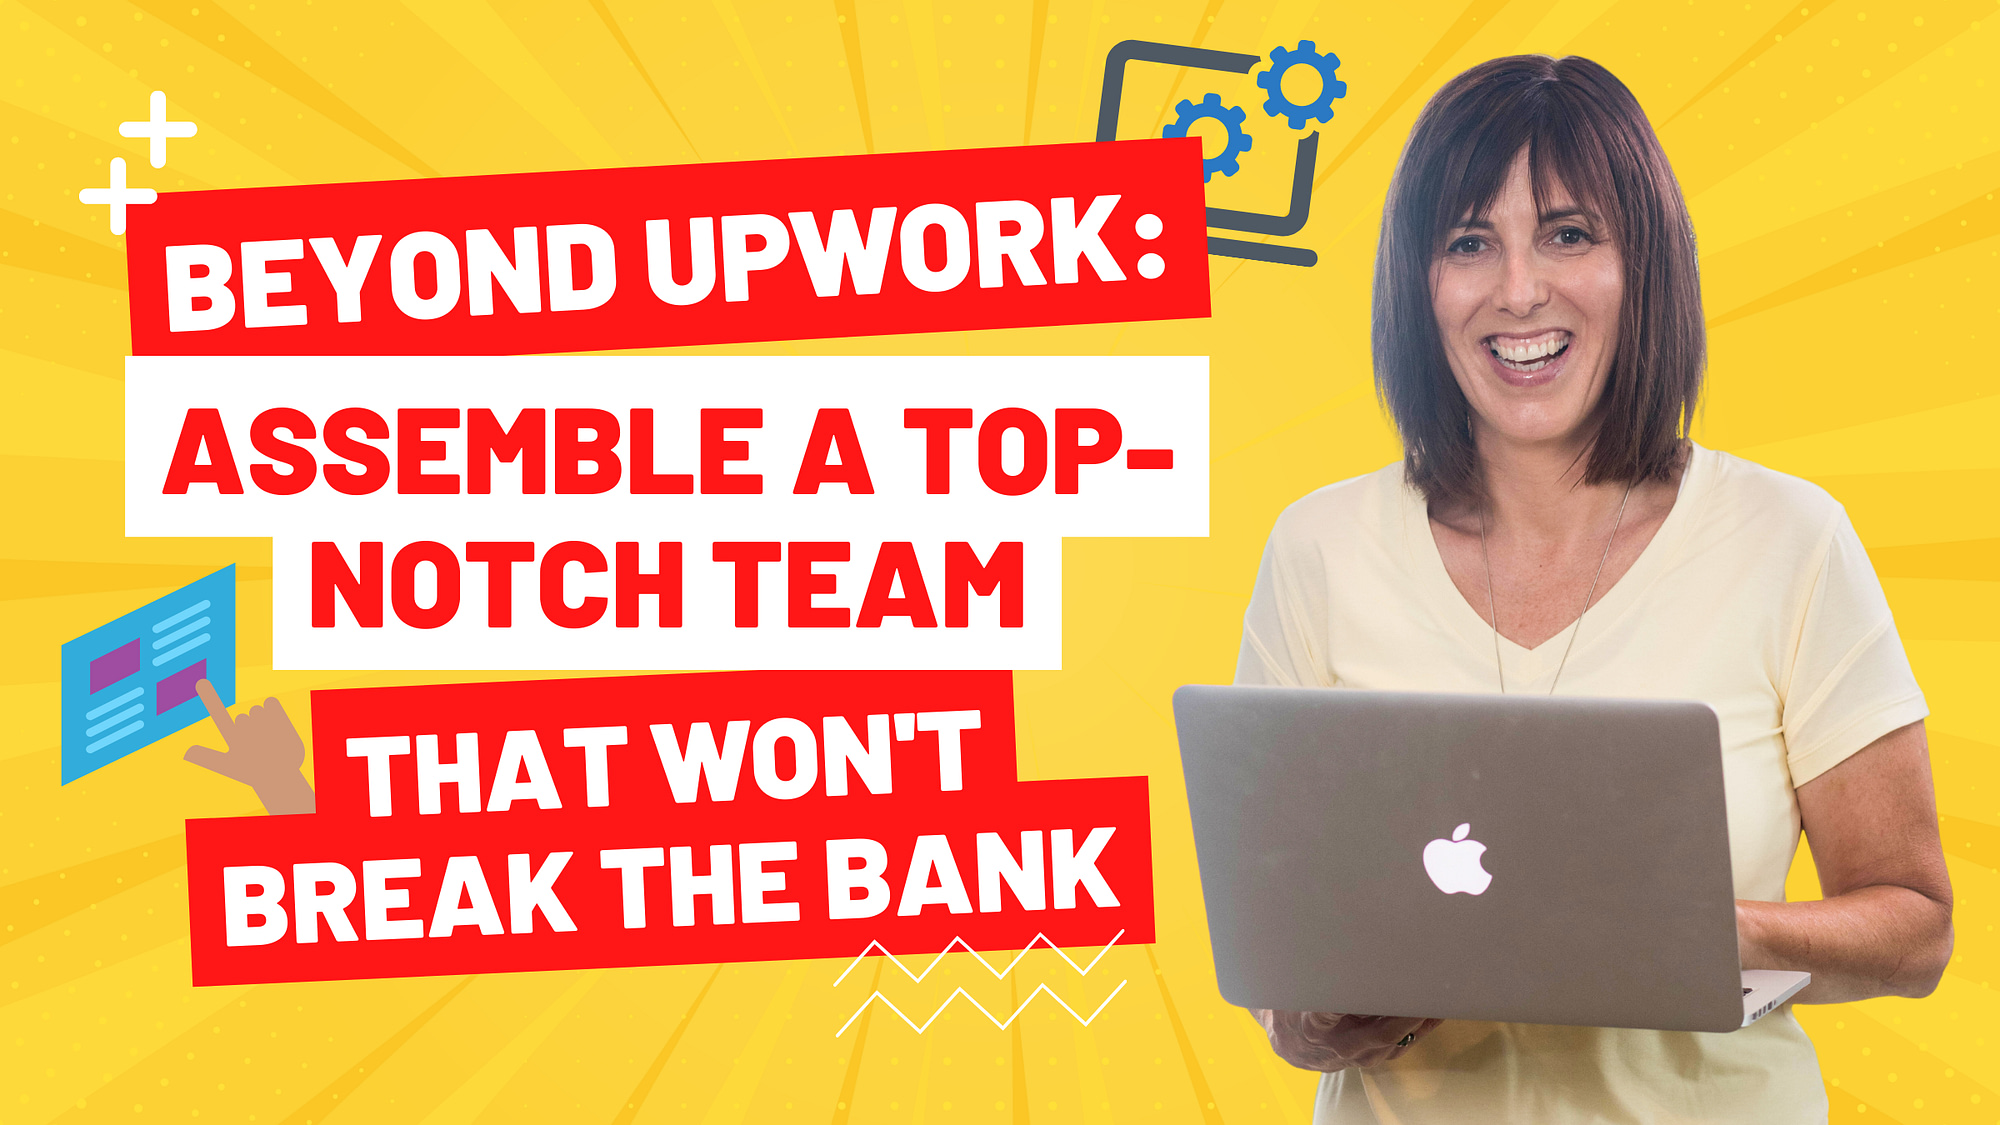 Beyond Upwork: Assemble A Top-Notch Team That Won't Break The Bank